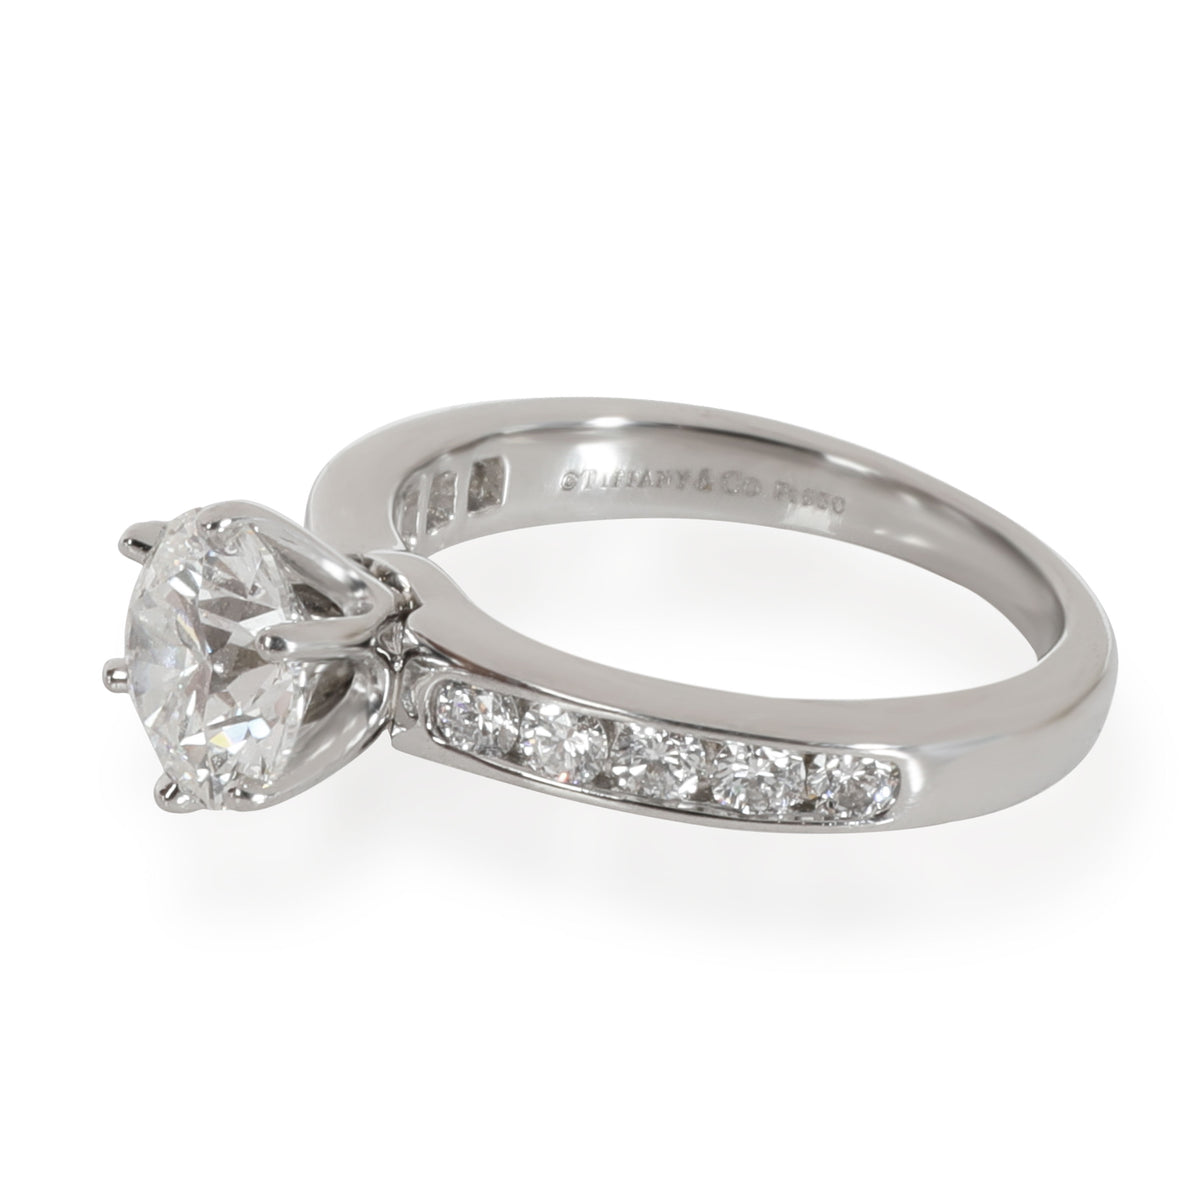 Tiffany & Co. Diamond Engagement Ring in  Platinum G VS1 1.78 CTW